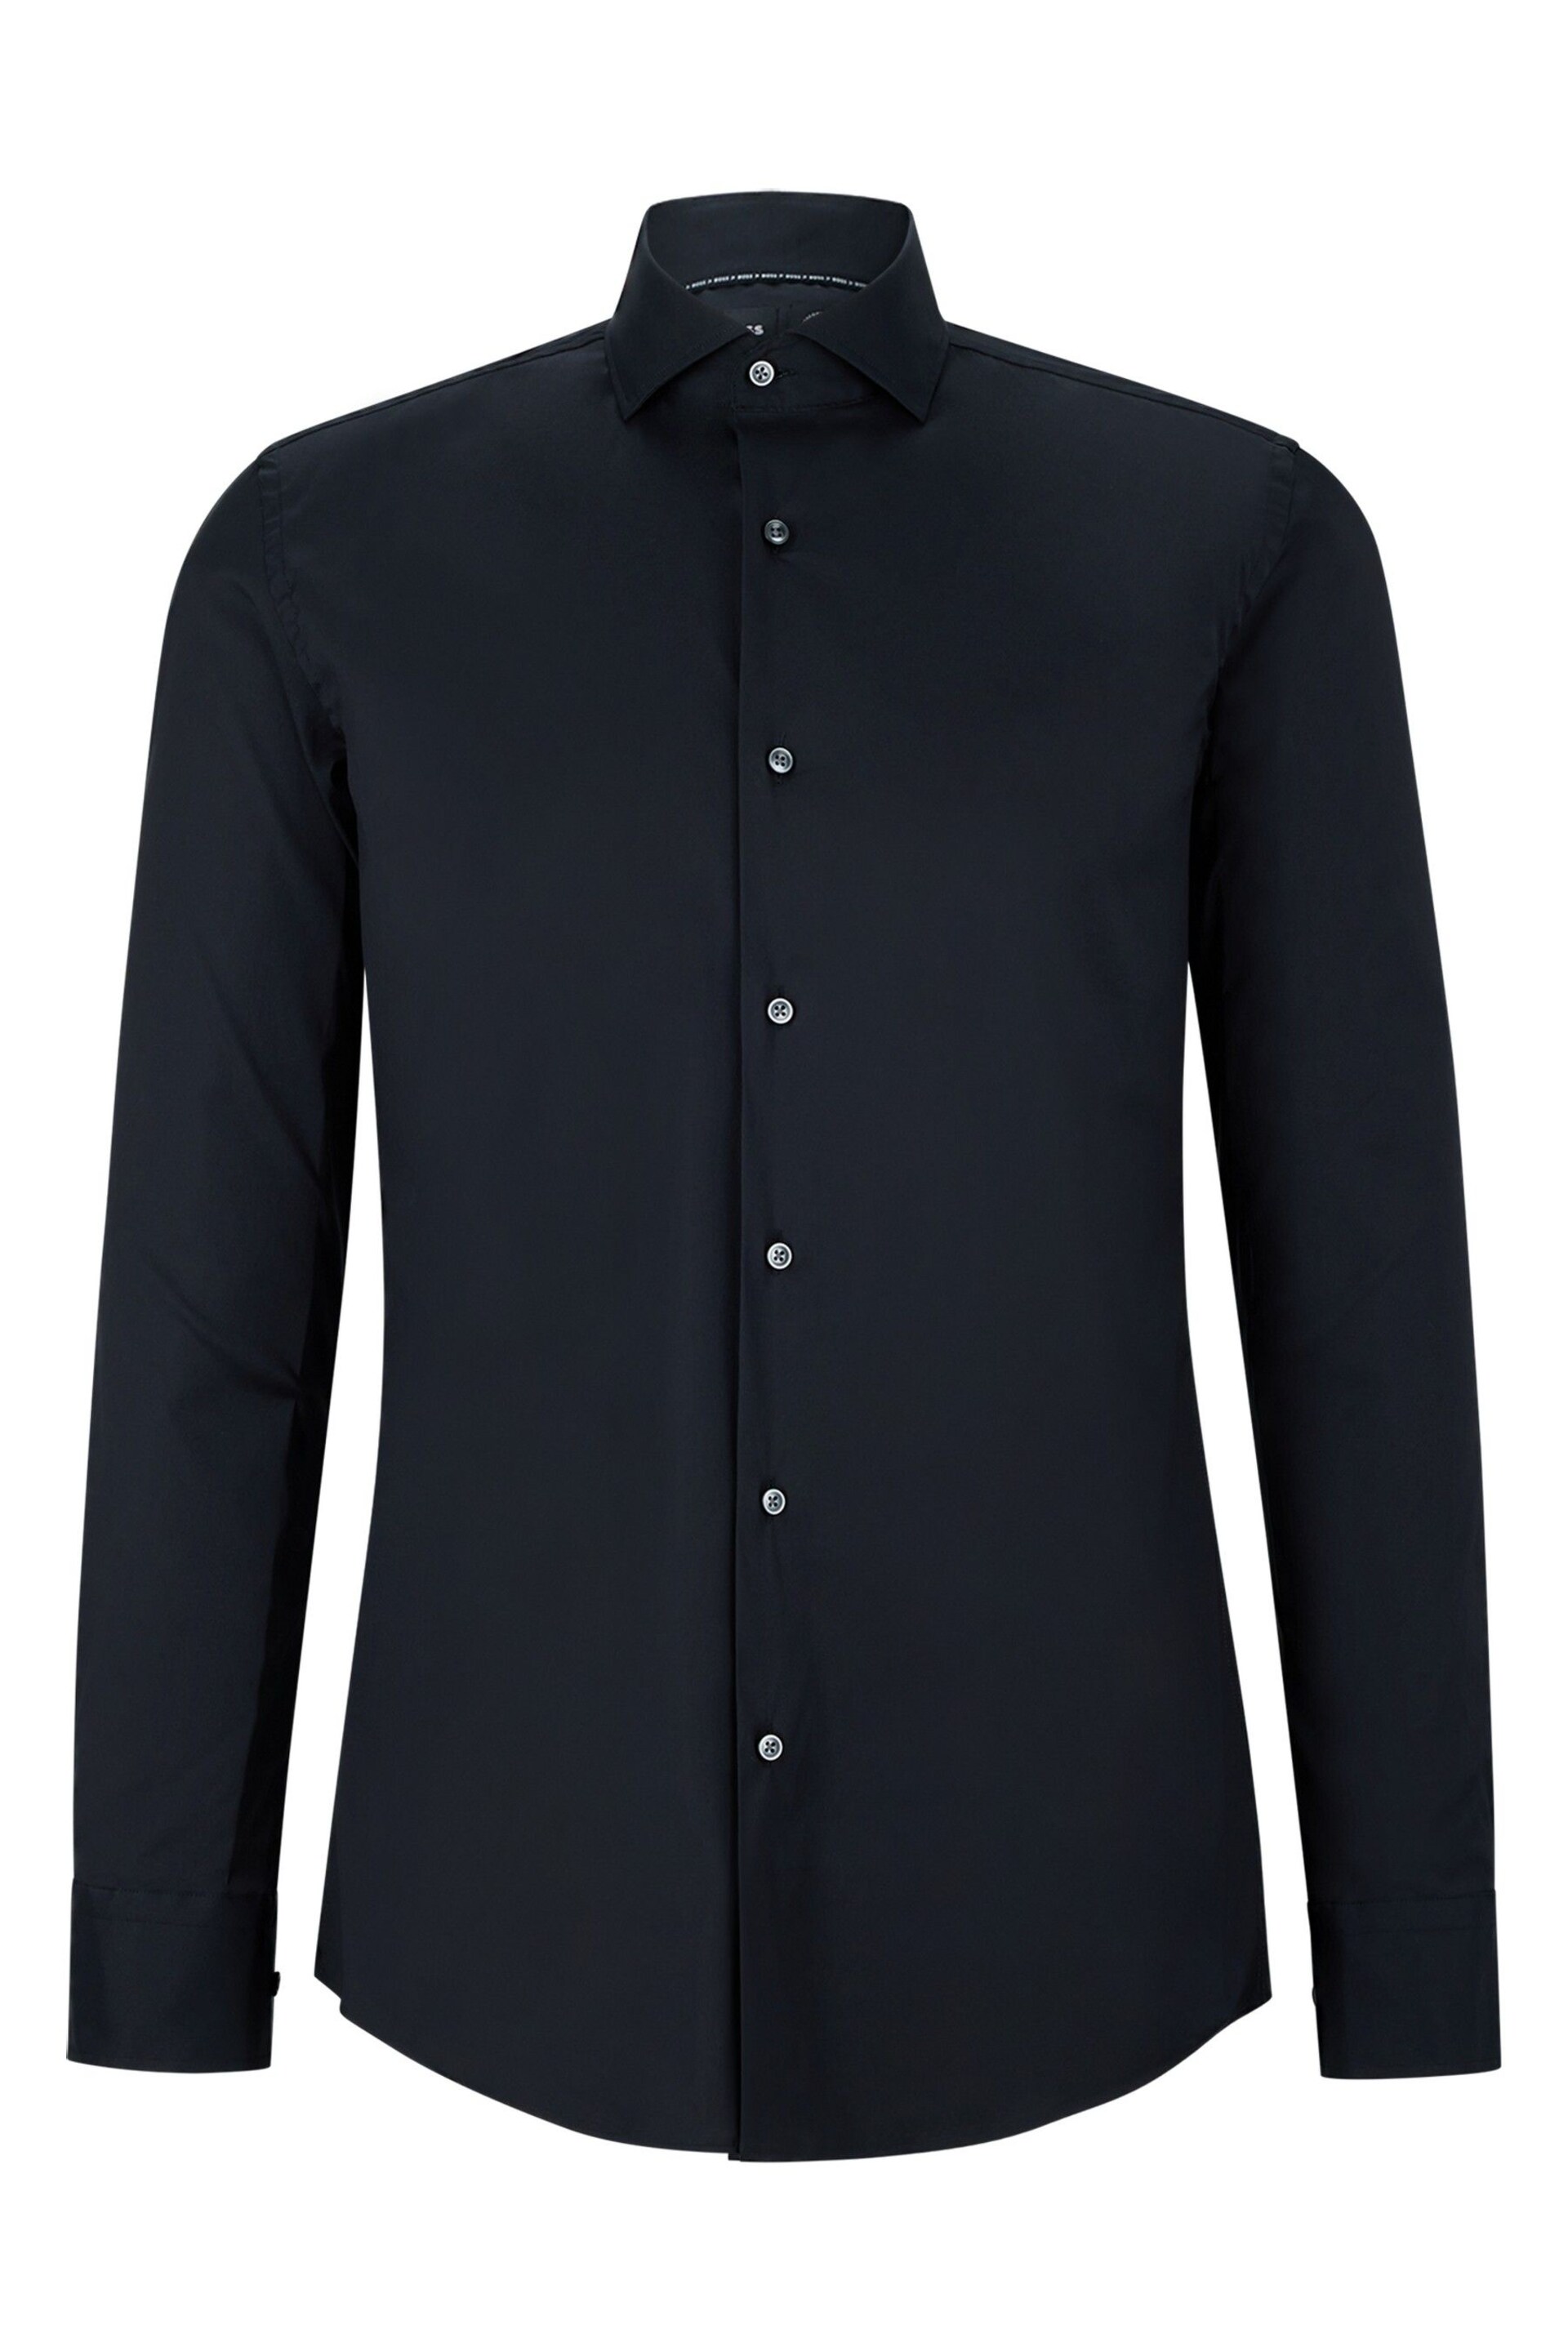 BOSS Black Slim Fit Dress Shirt - Image 1 of 1